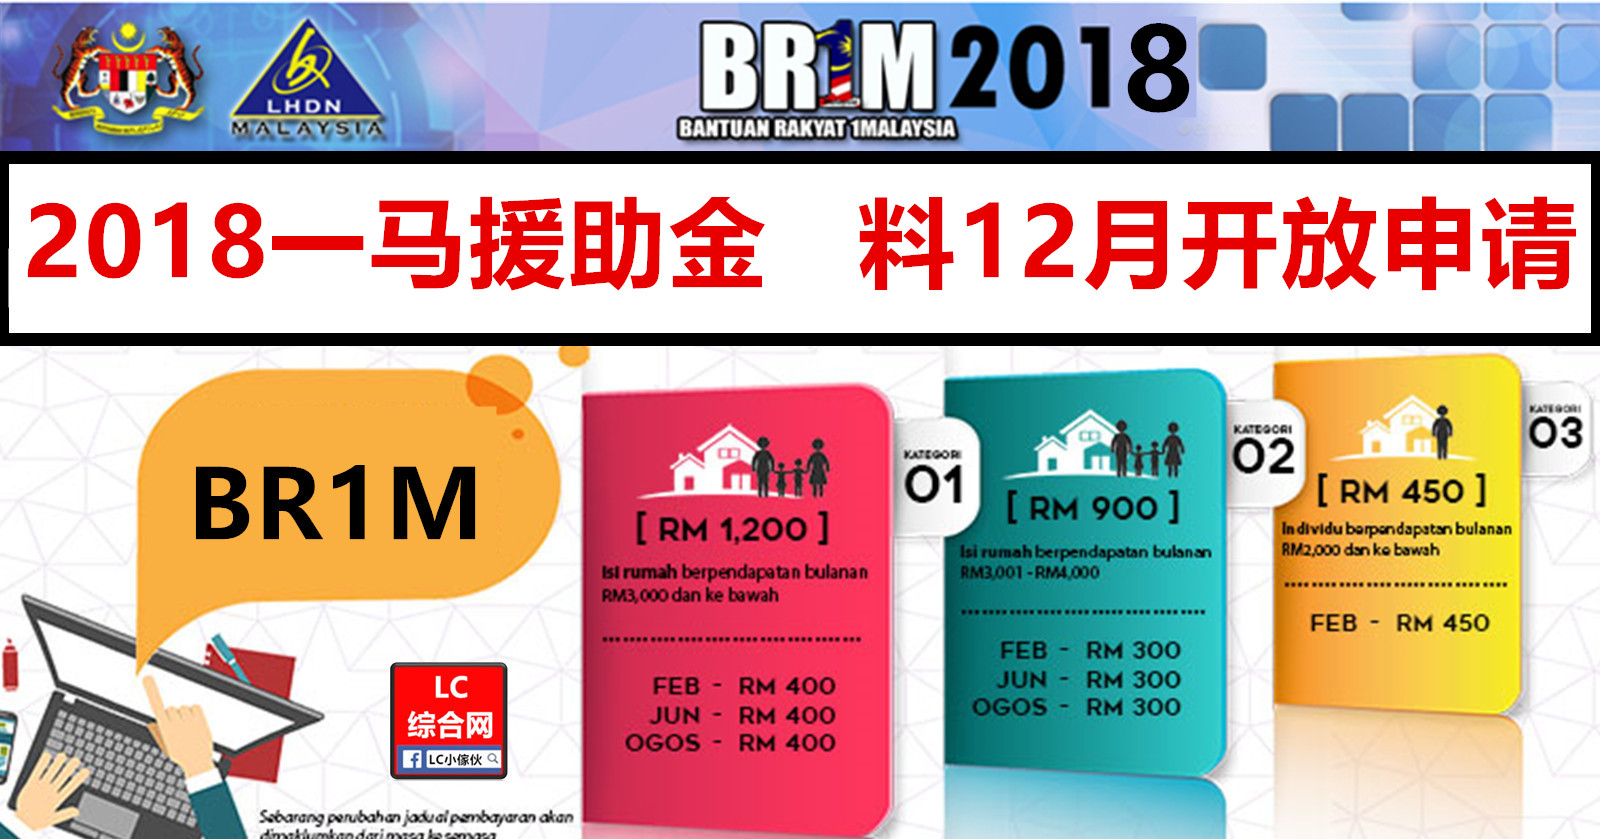 BR1M 2018年一马援助金  LC 小傢伙綜合網